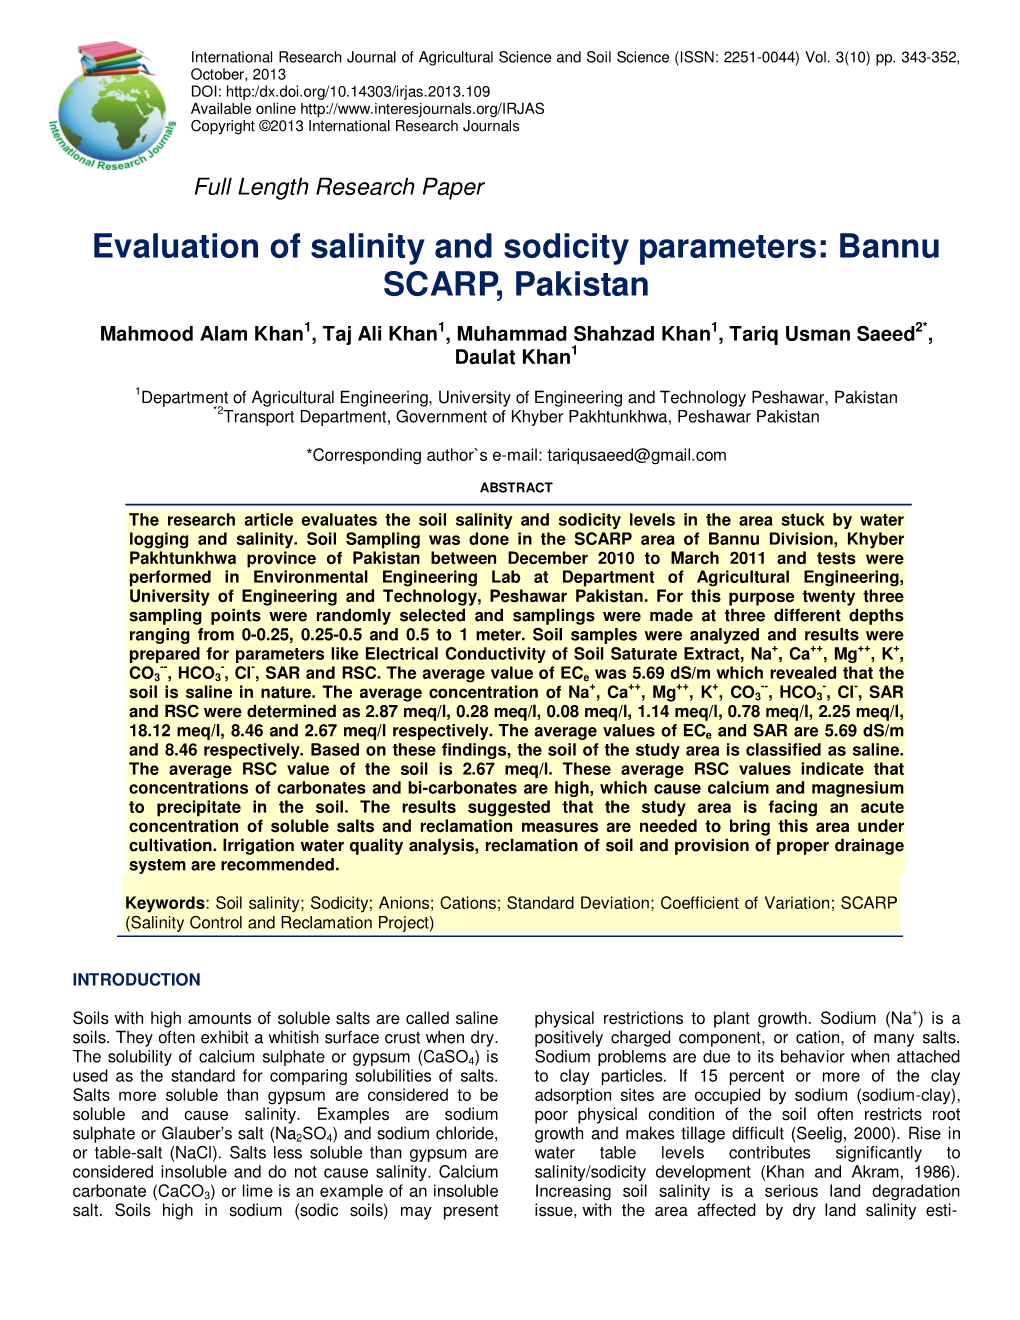 Evaluation of Salinity and Sodicity Parameters: Bannu SCARP, Pakistan